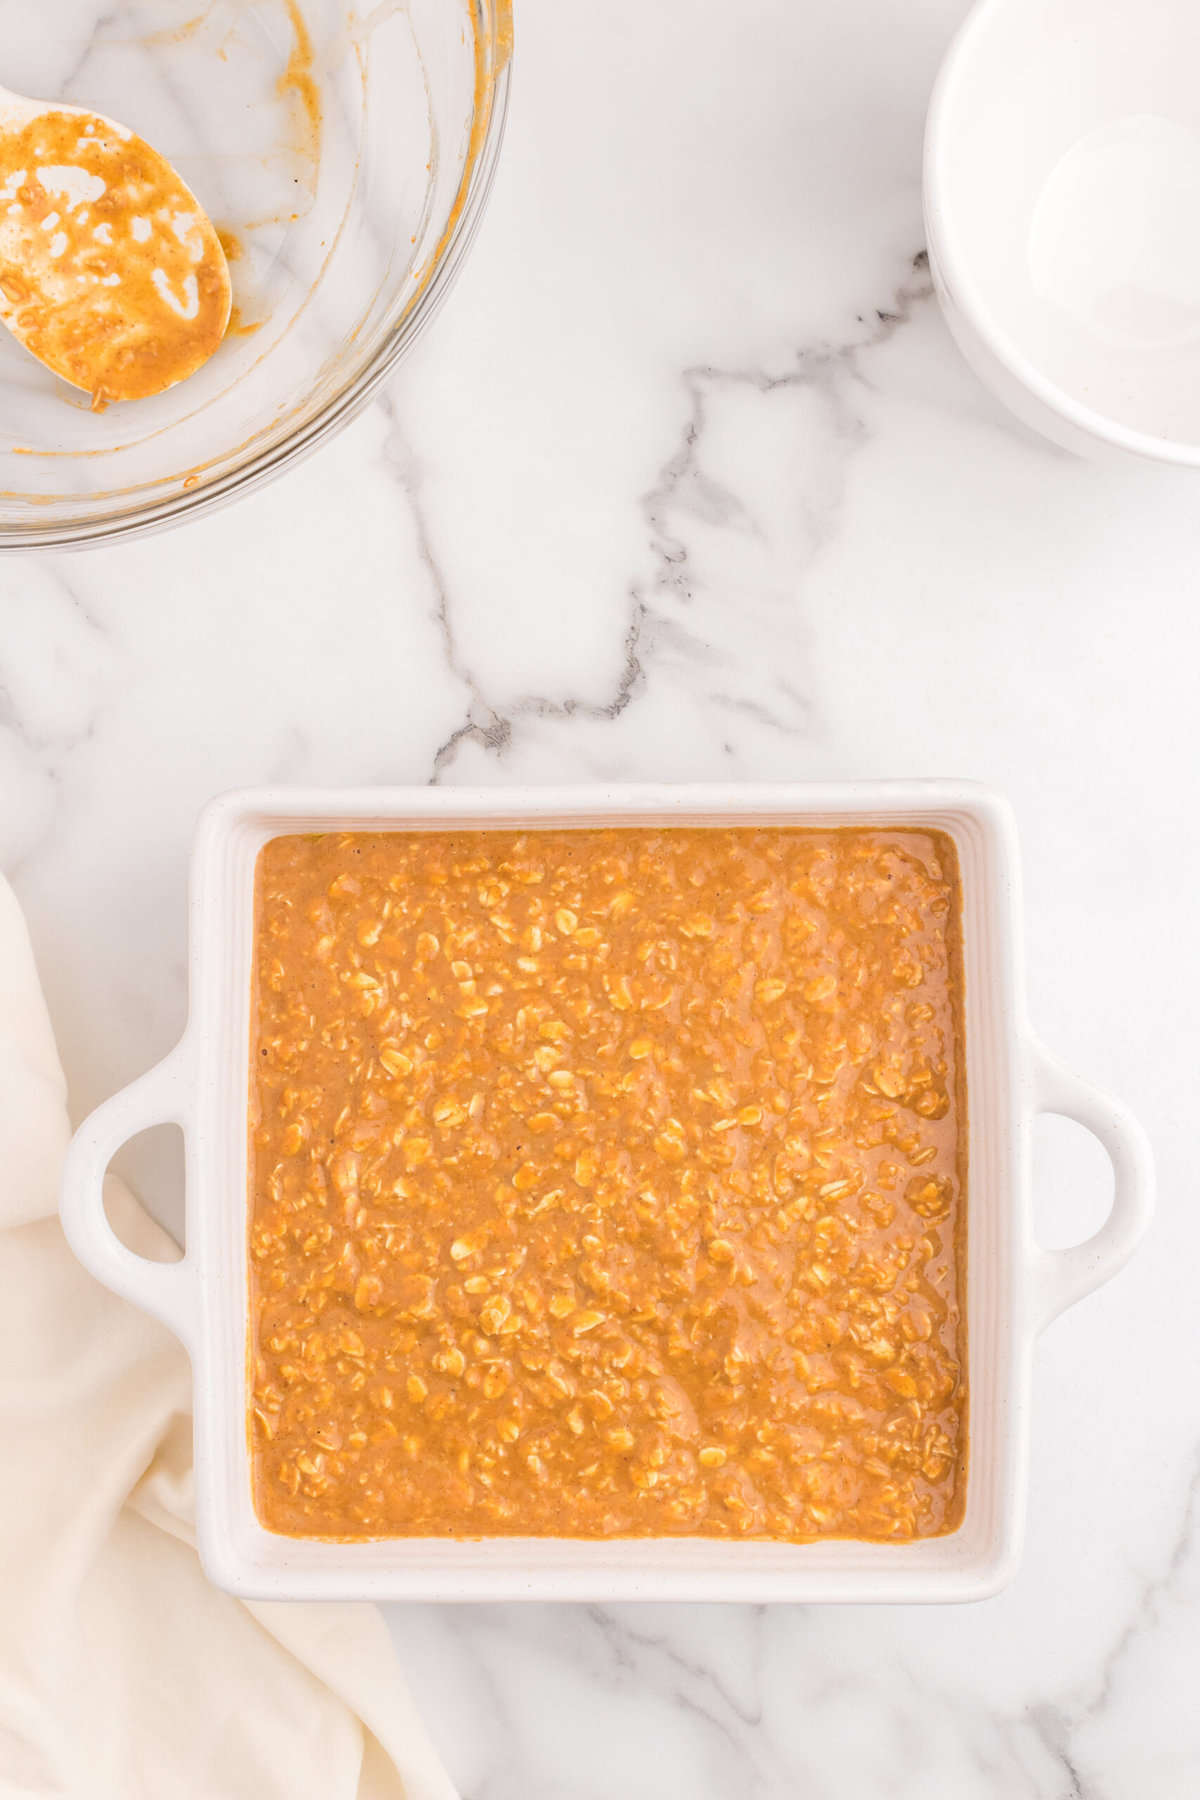 Baked Pumpkin Oatmeal recipe in square baking dish before baking